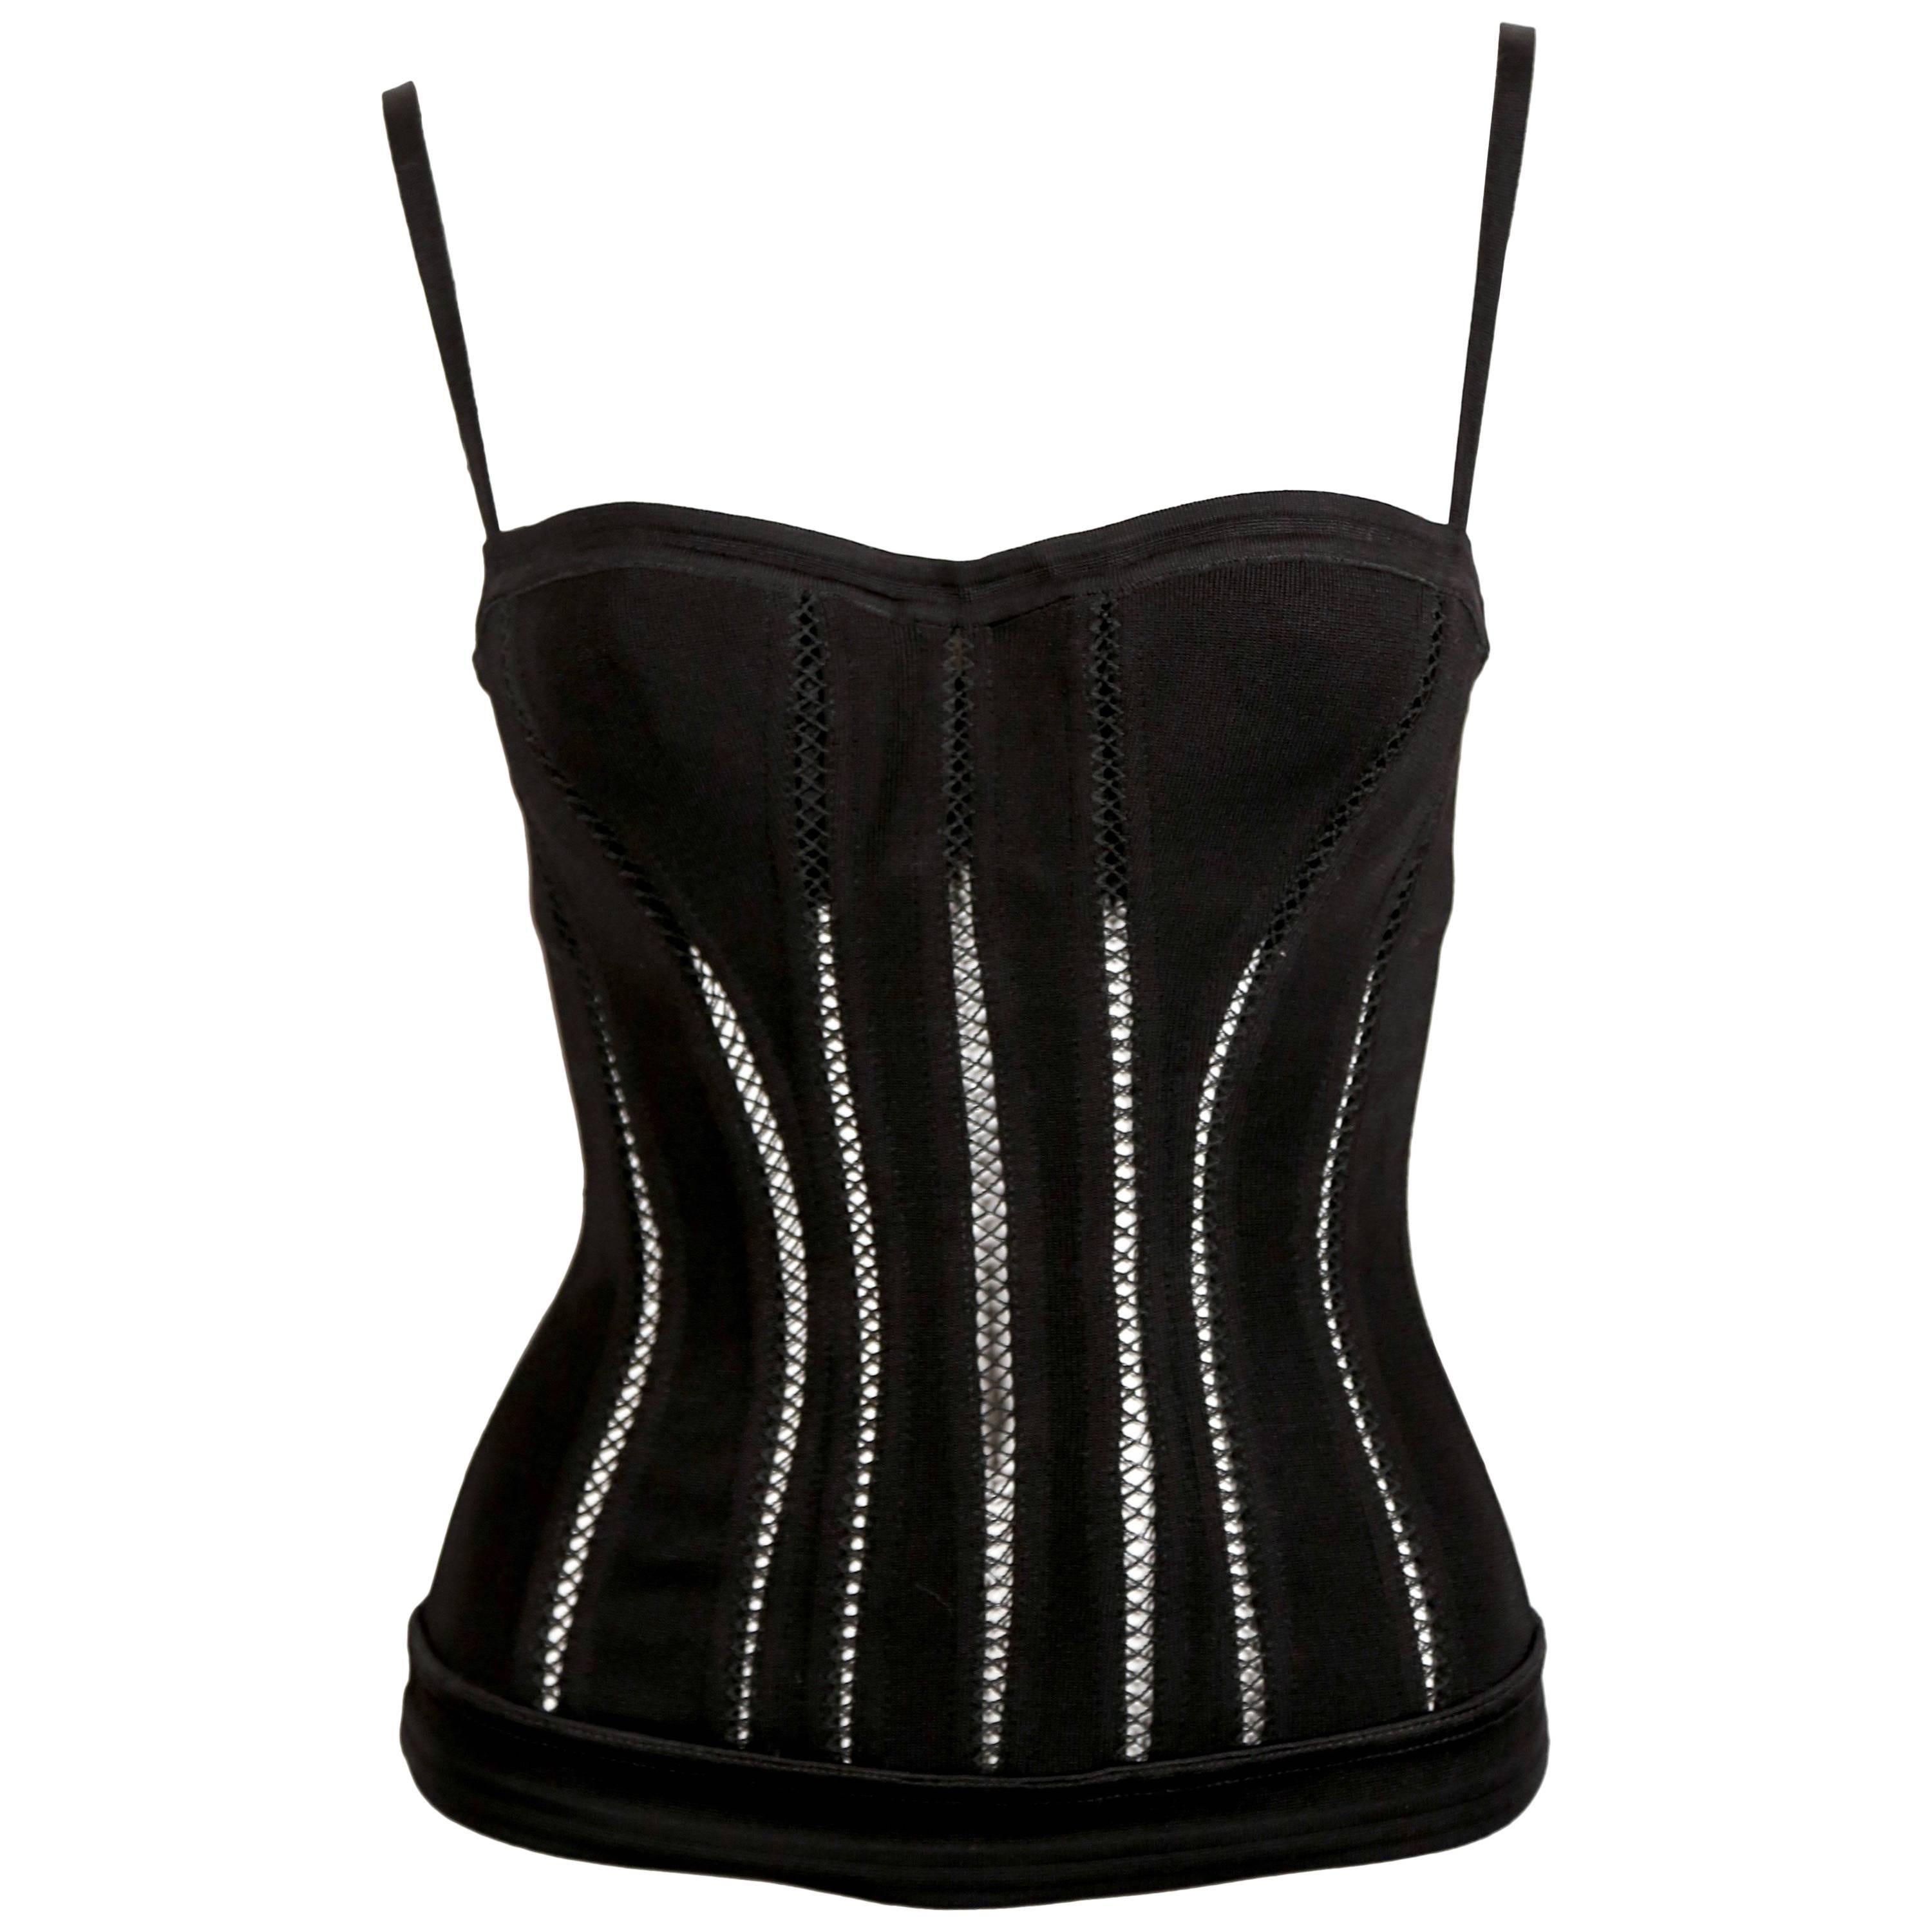 1991 AZZEDINE ALAIA black knit bustier corset top